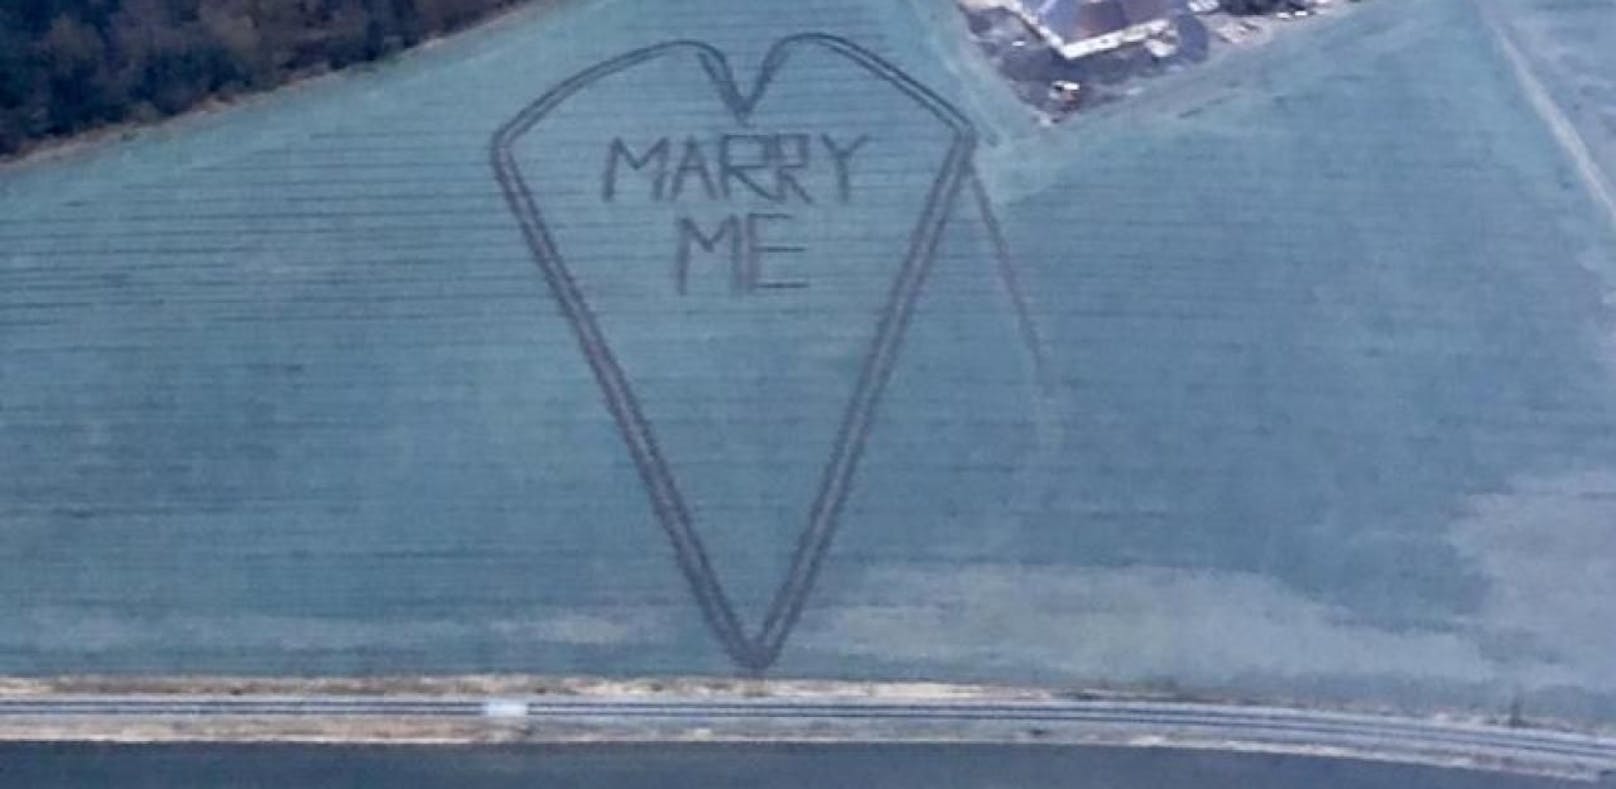 "Marry me" im Acker: Bauer zeigt großes Herz